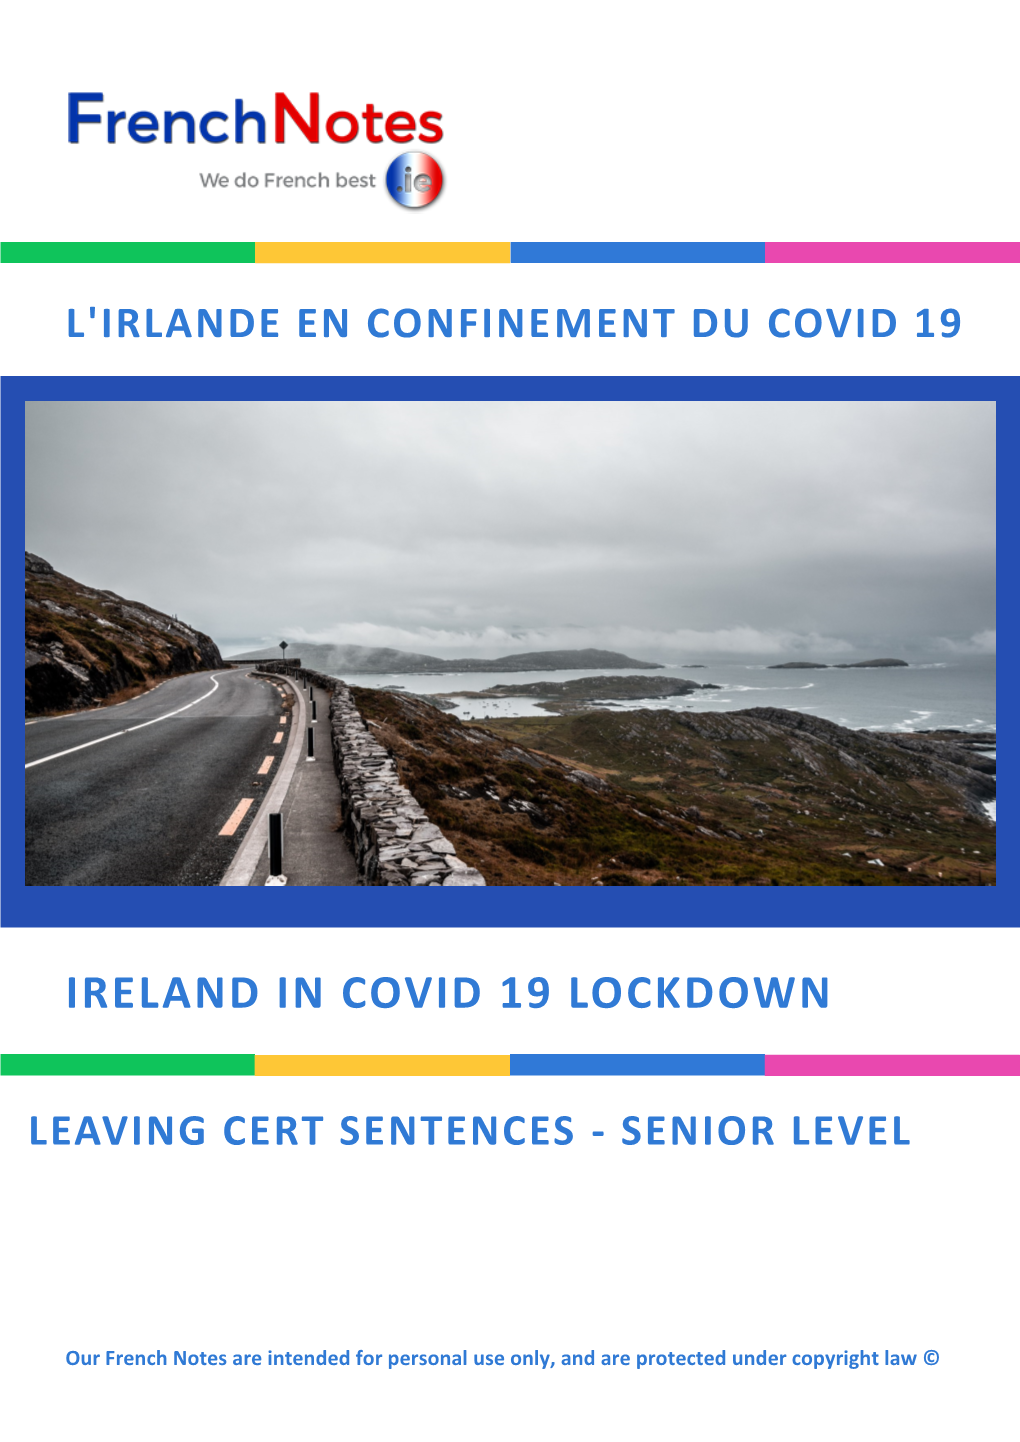 Ireland in Covid 19 Lockdown